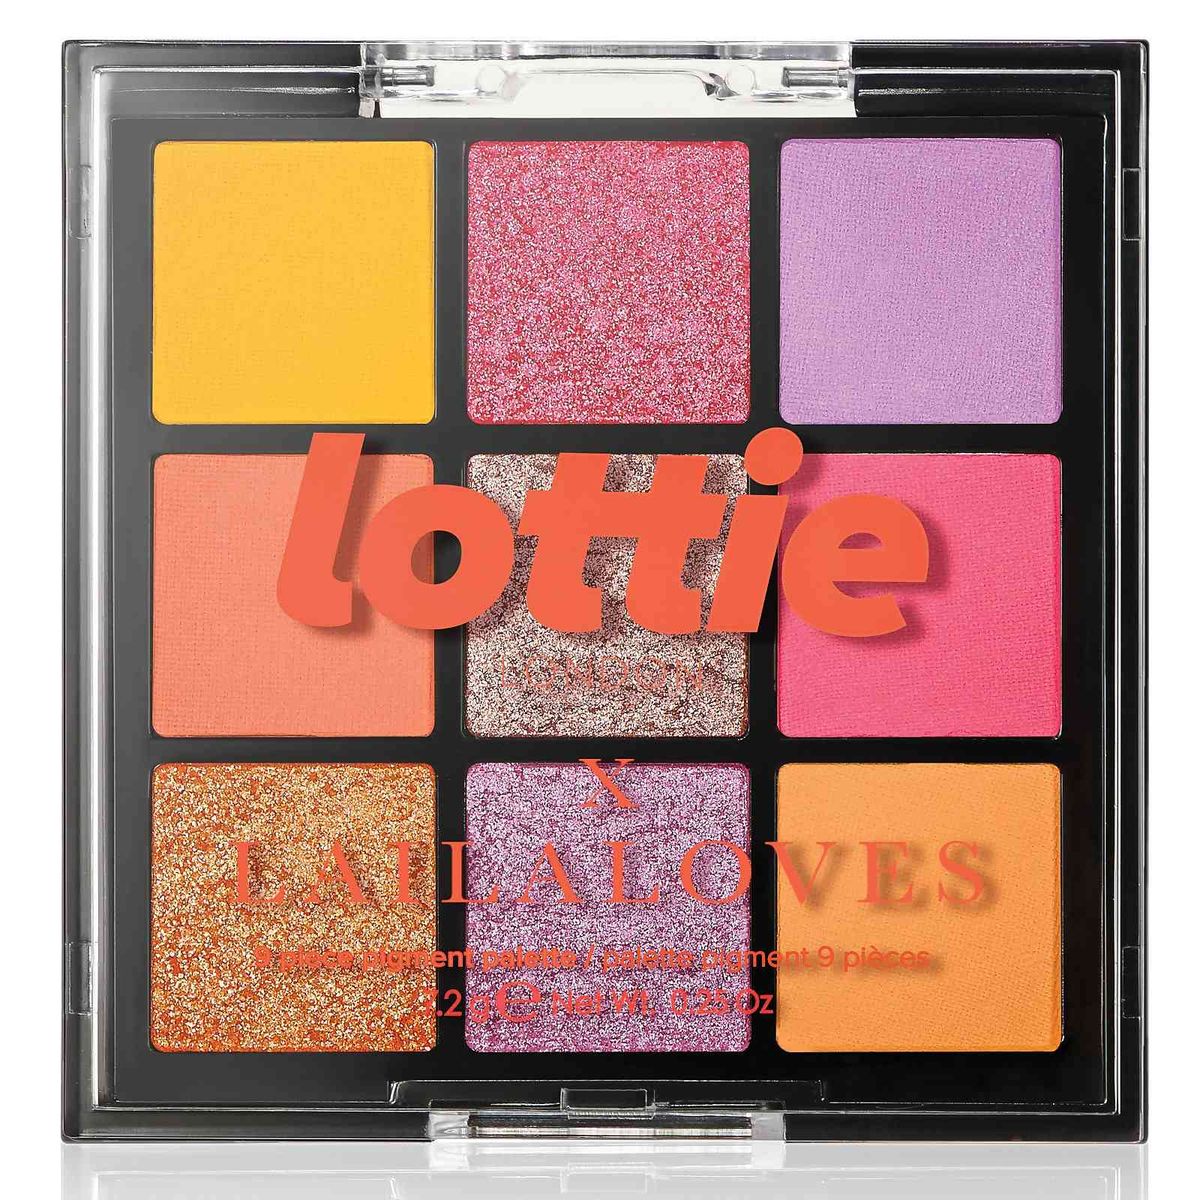 Lottie London Ibiza paleta - Nova godina